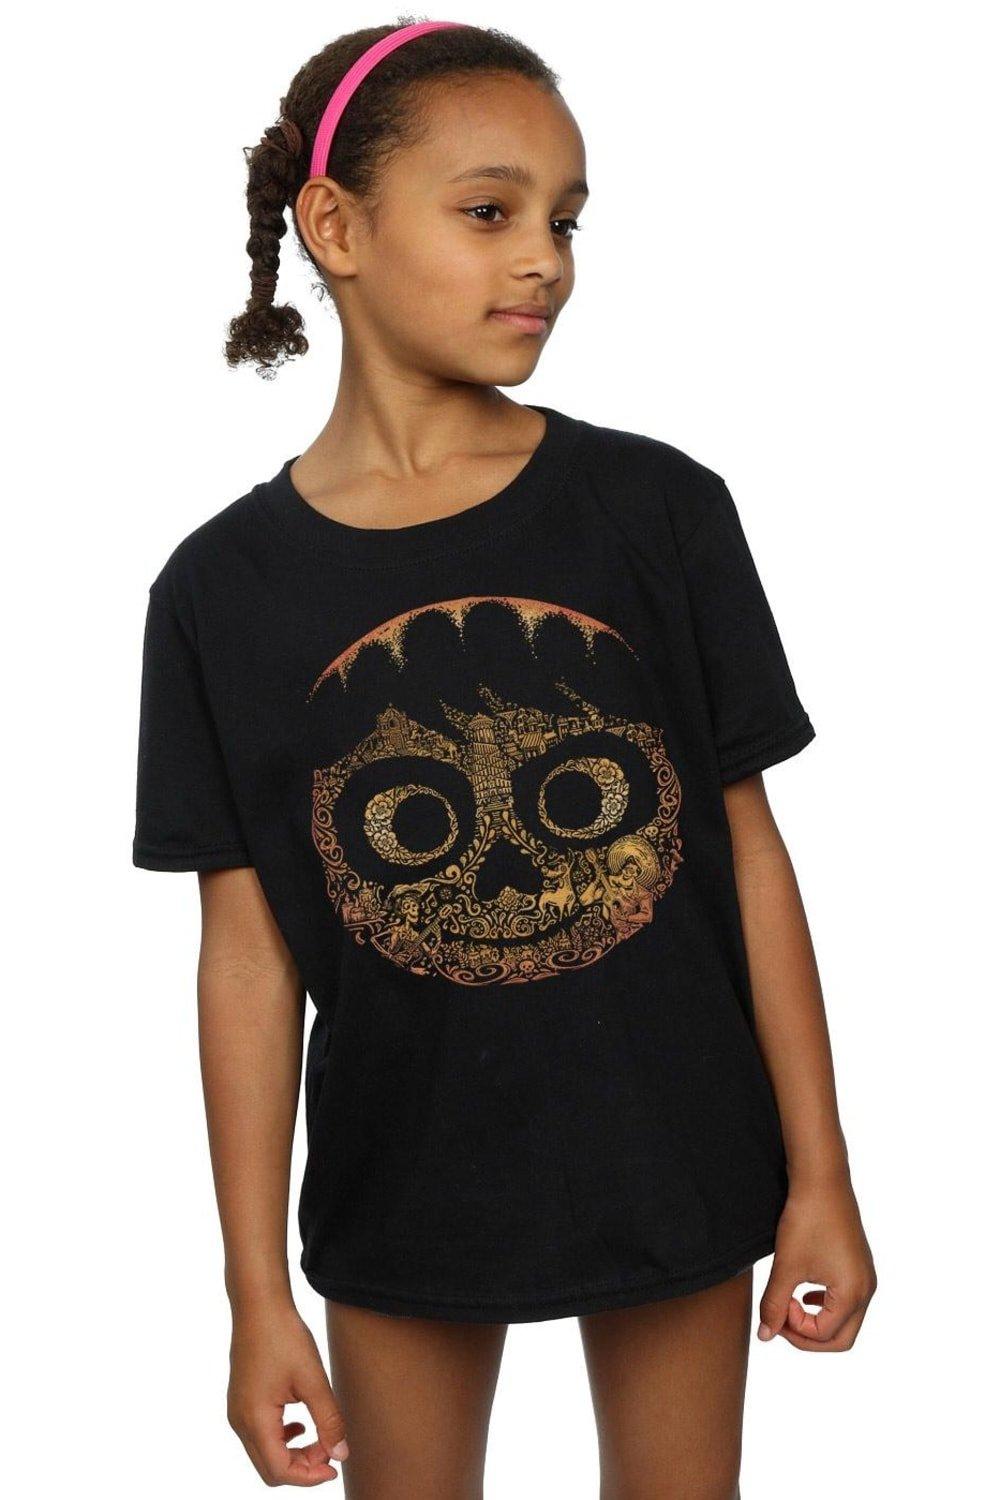 Coco Miguel Face Cotton T-Shirt